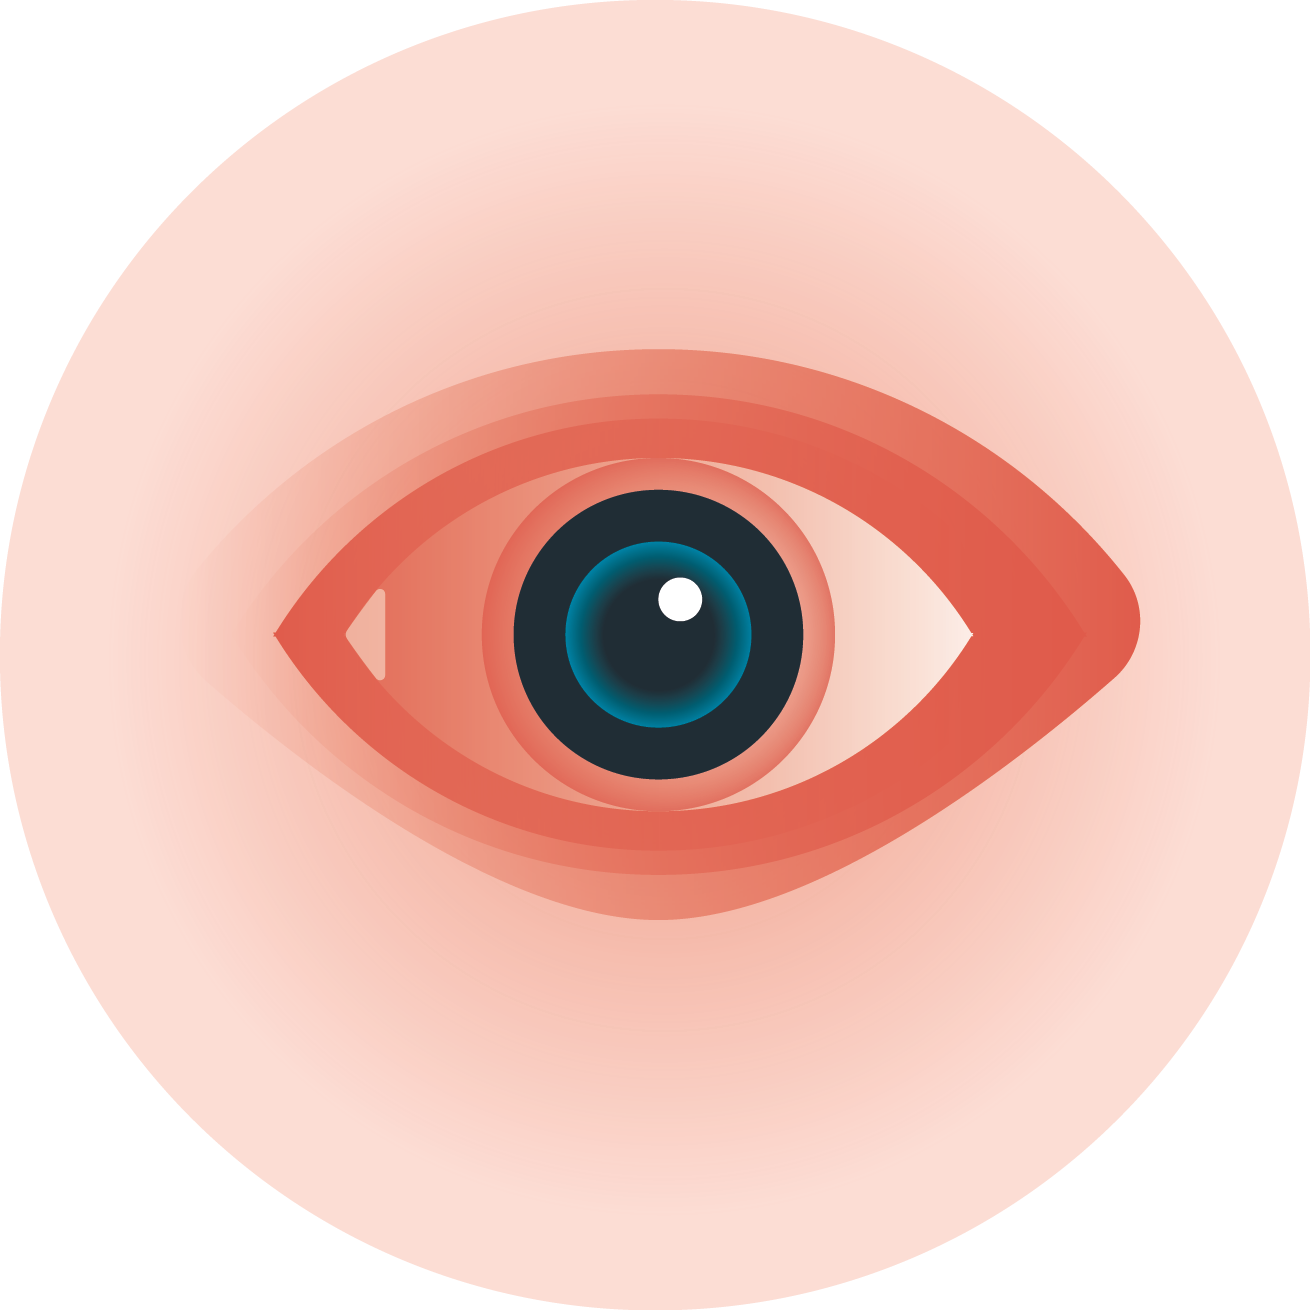 eyeball clipart eye irritation